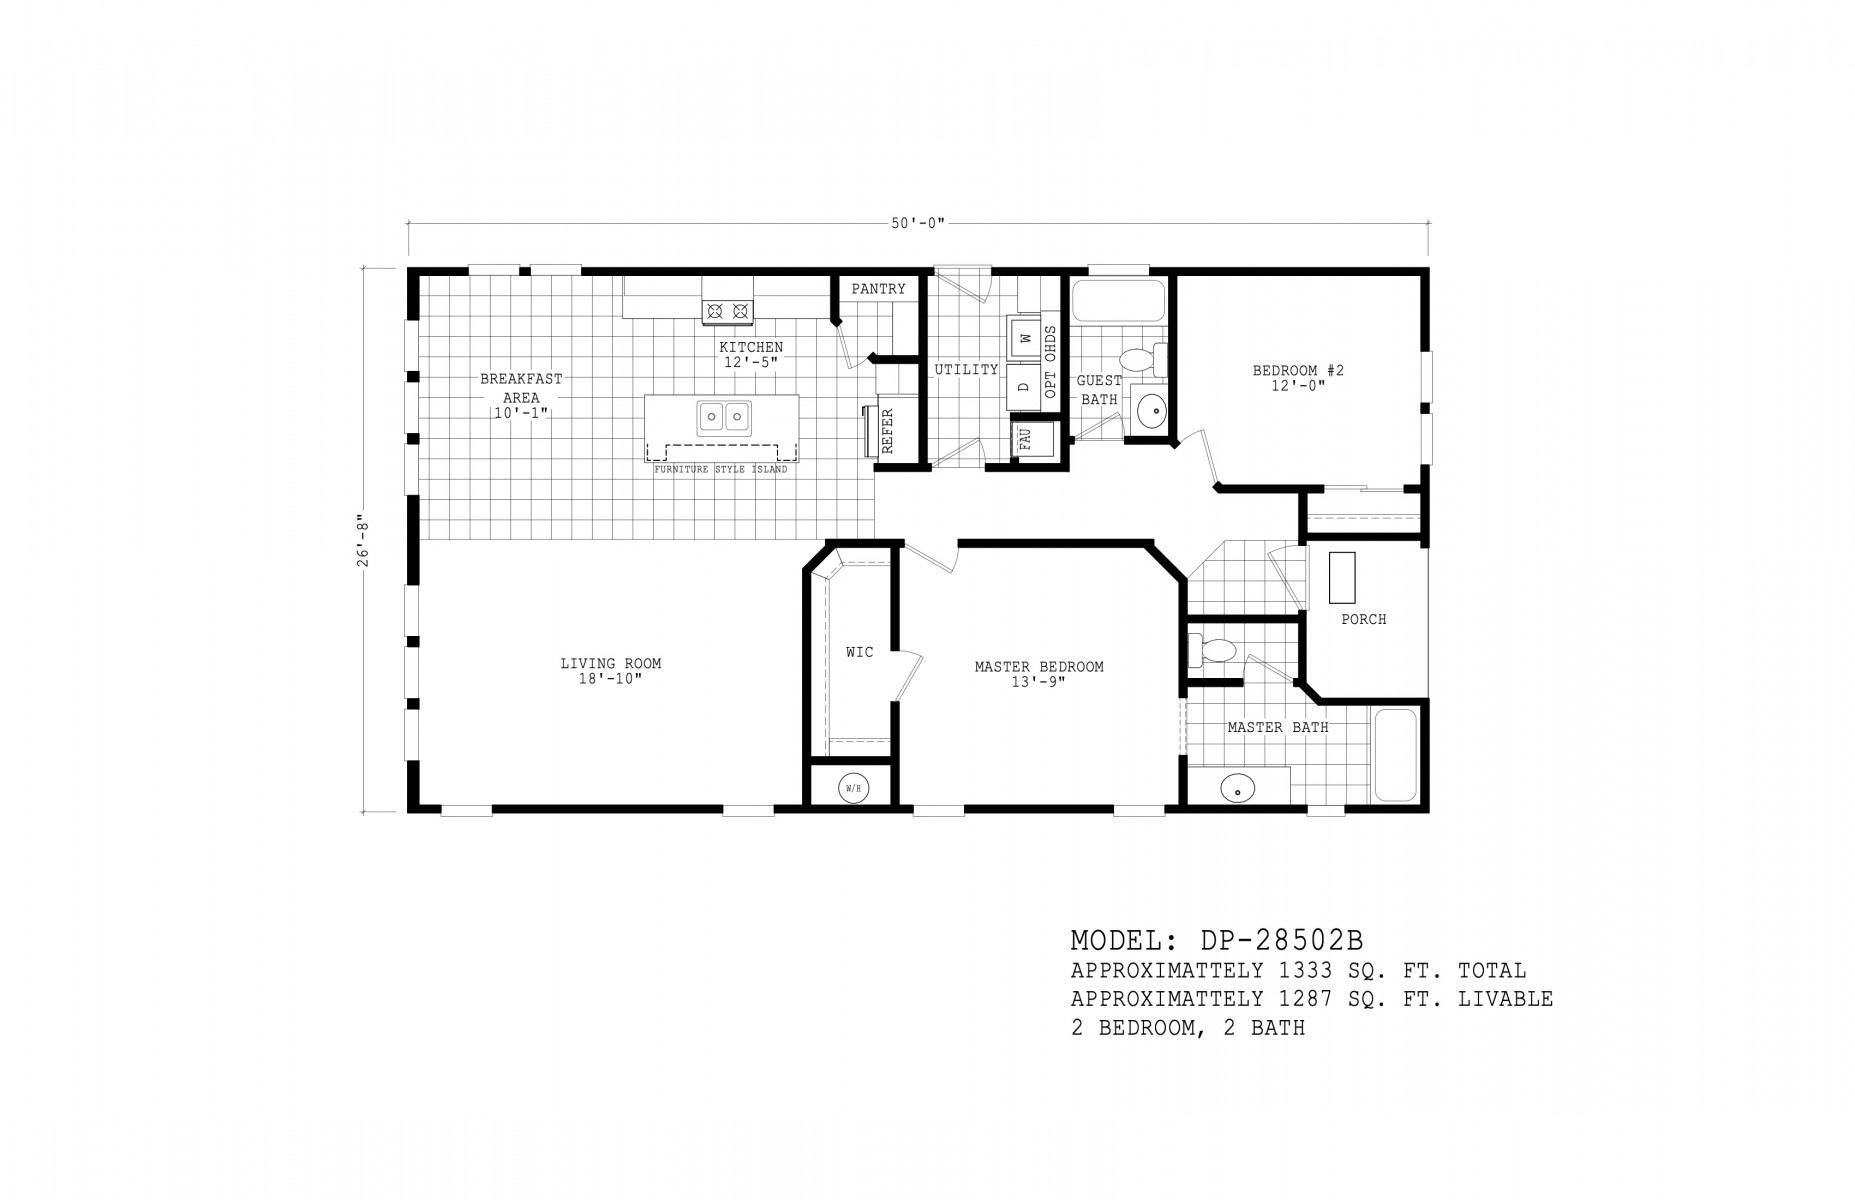 Homes Direct Modular Homes - Model DP28502B - Floorplan